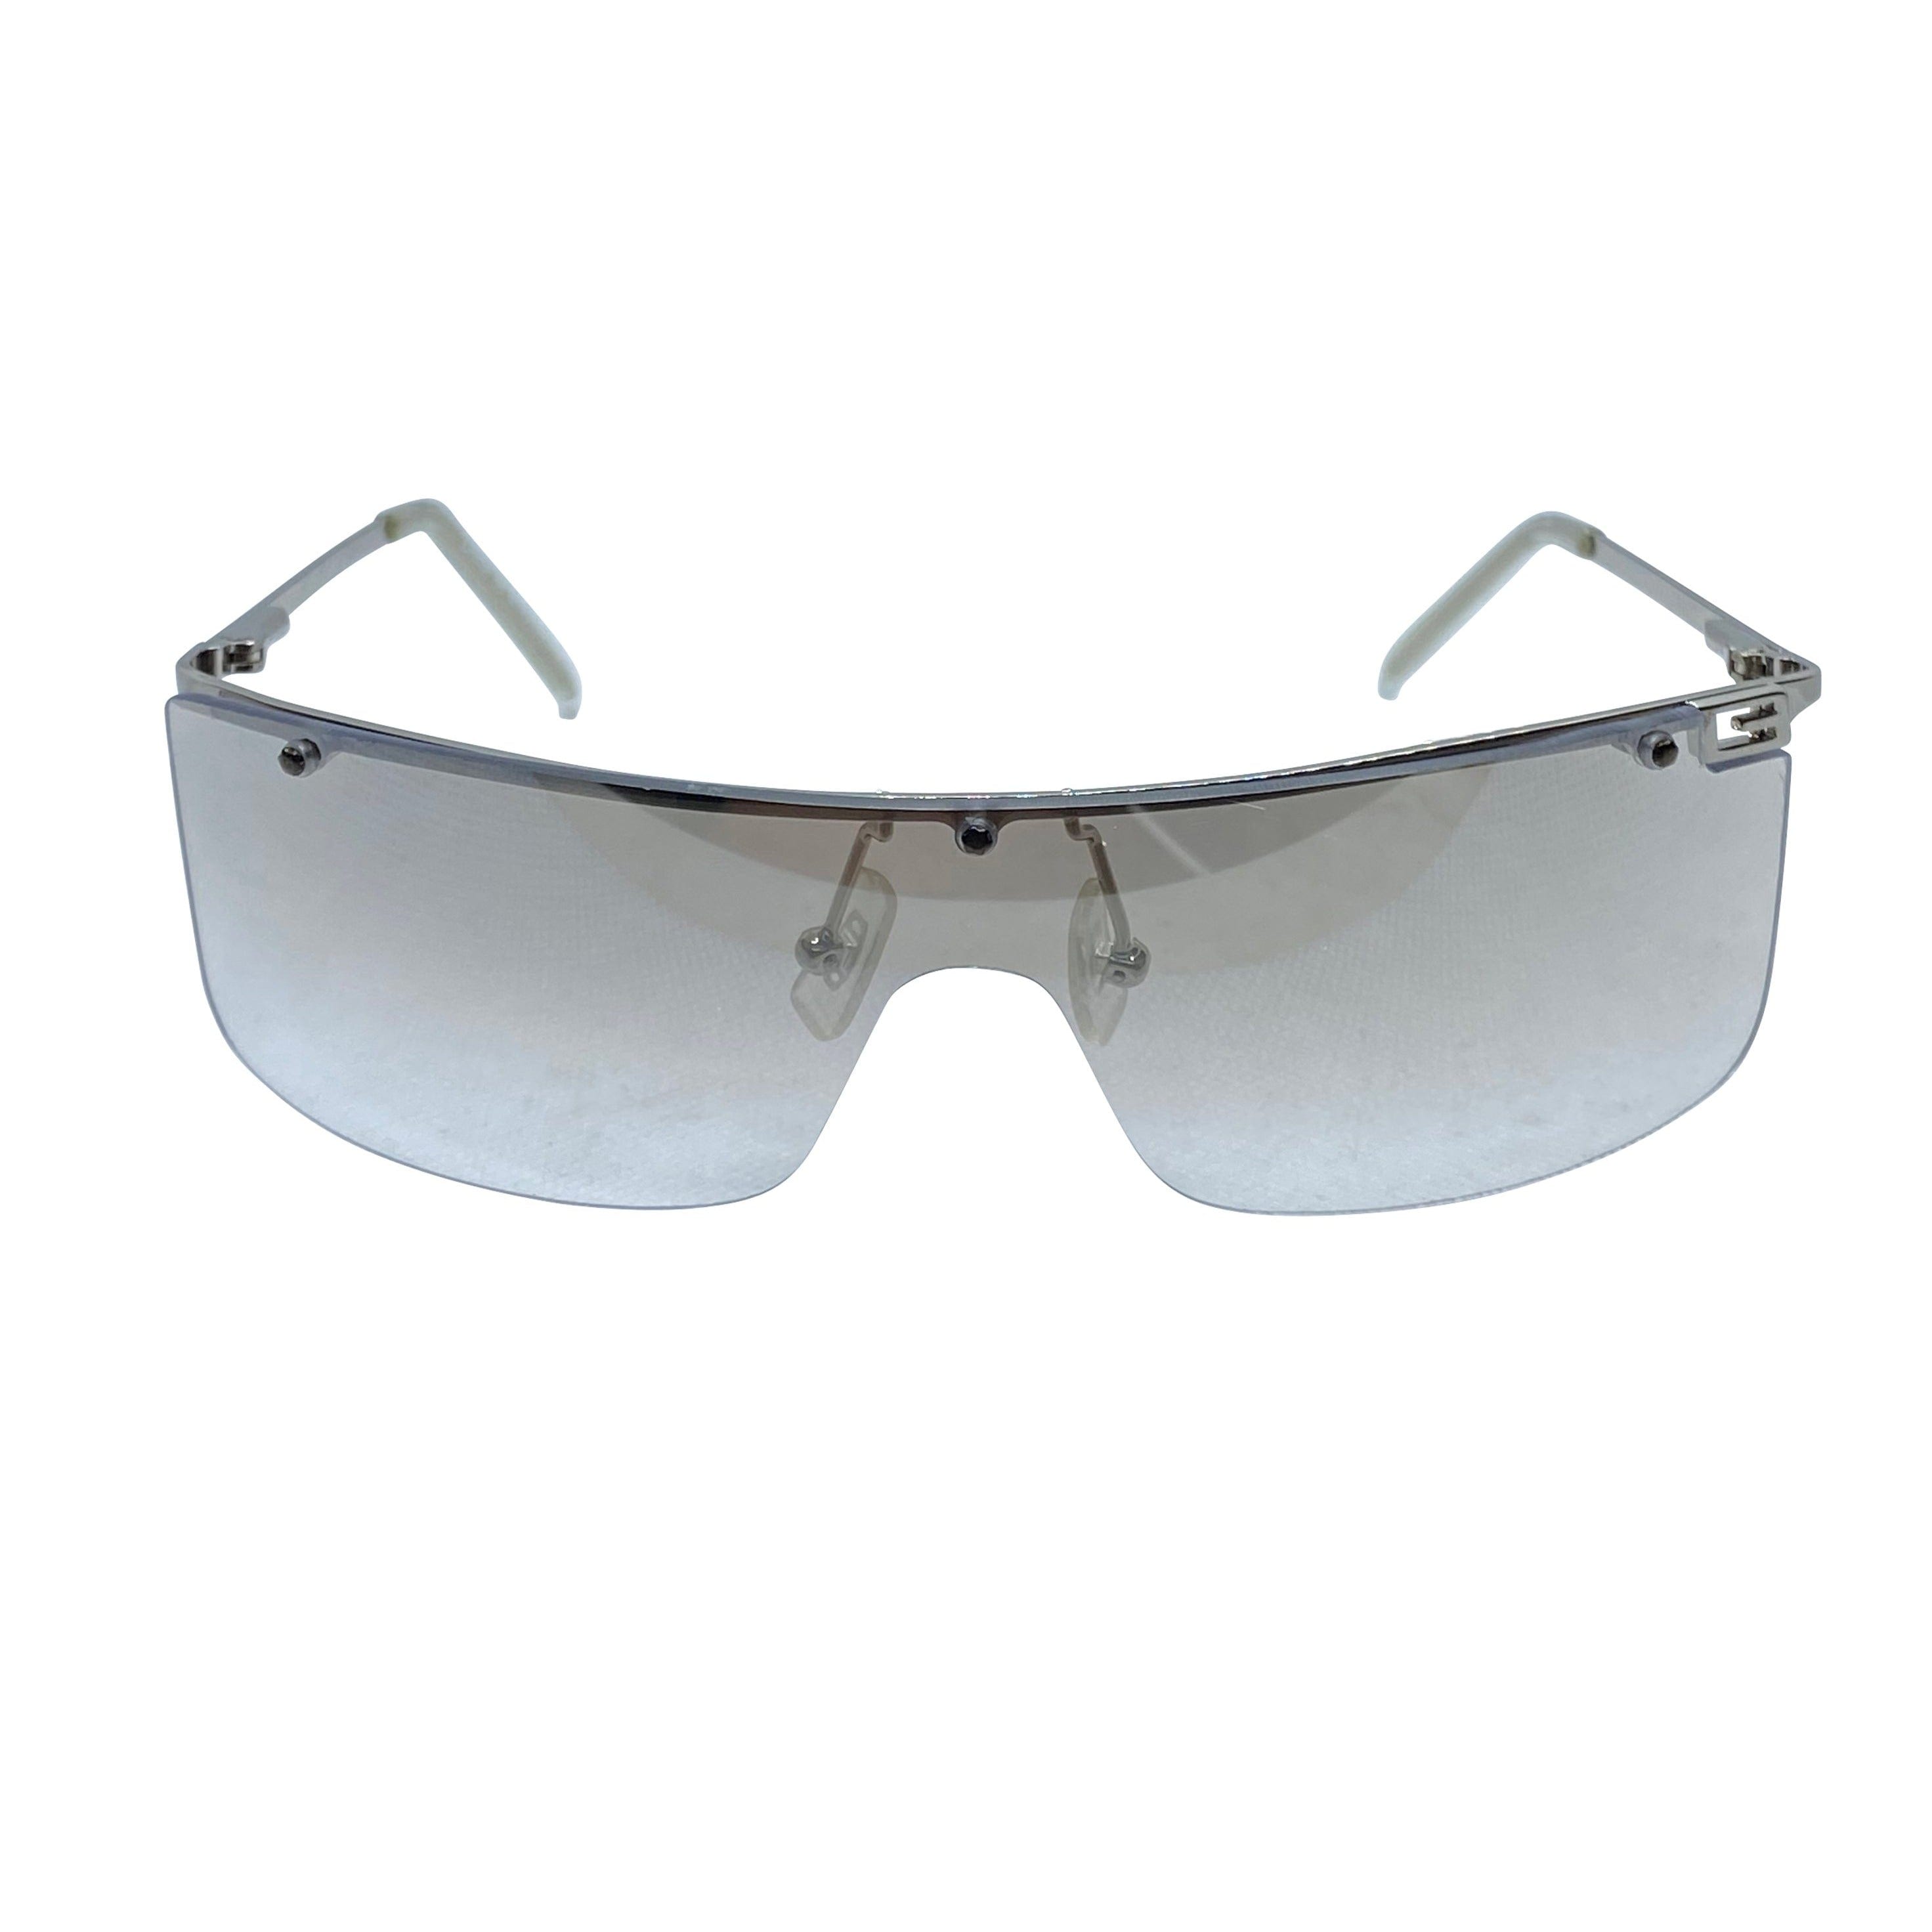 GiGi ALLEN Flash Y2k Rimless Sunglasses